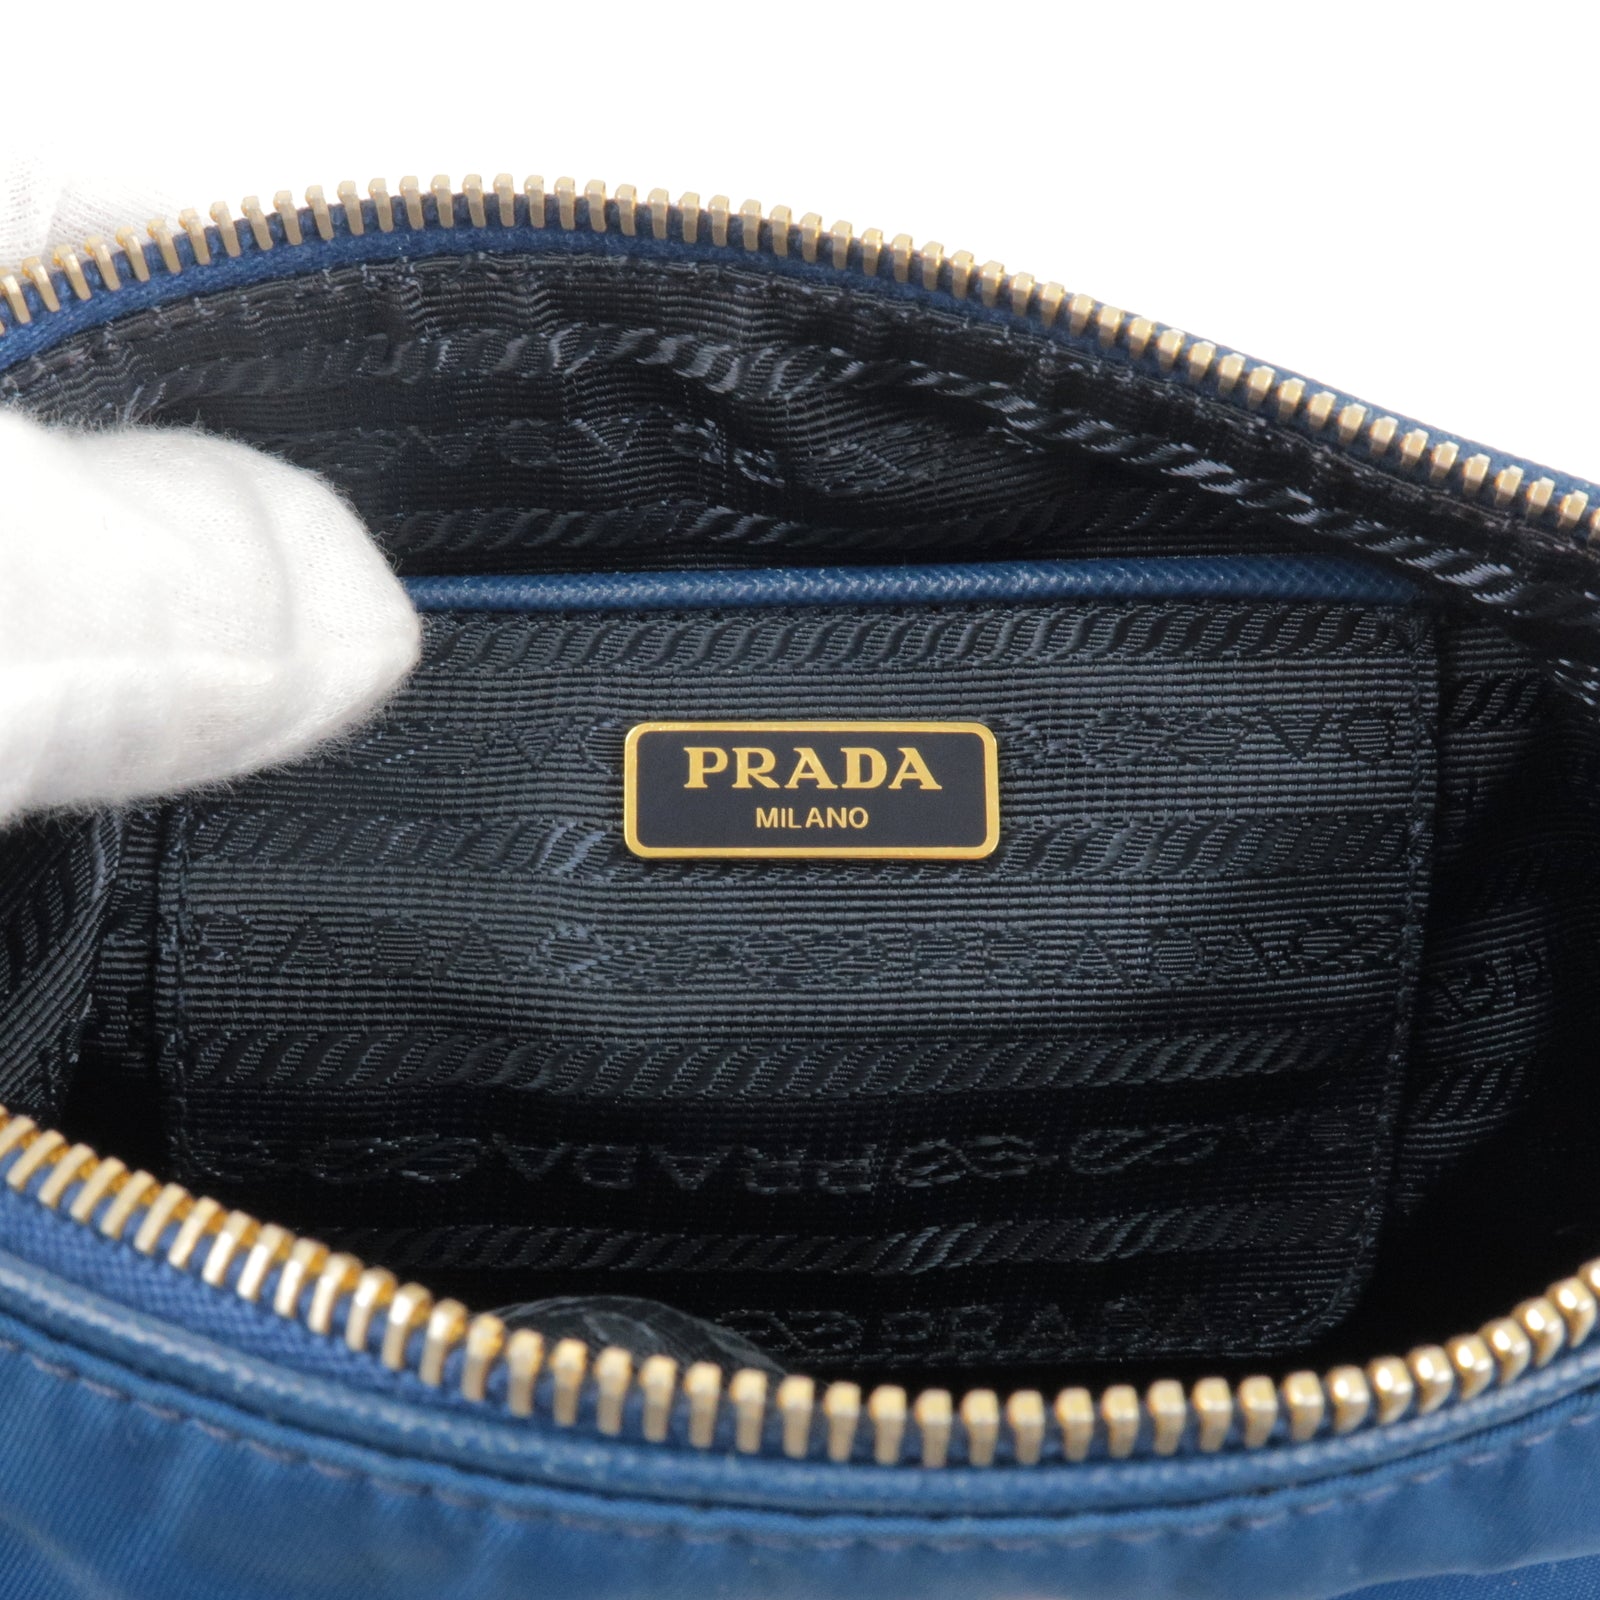 Buy Prada Bag Online In India - Etsy India